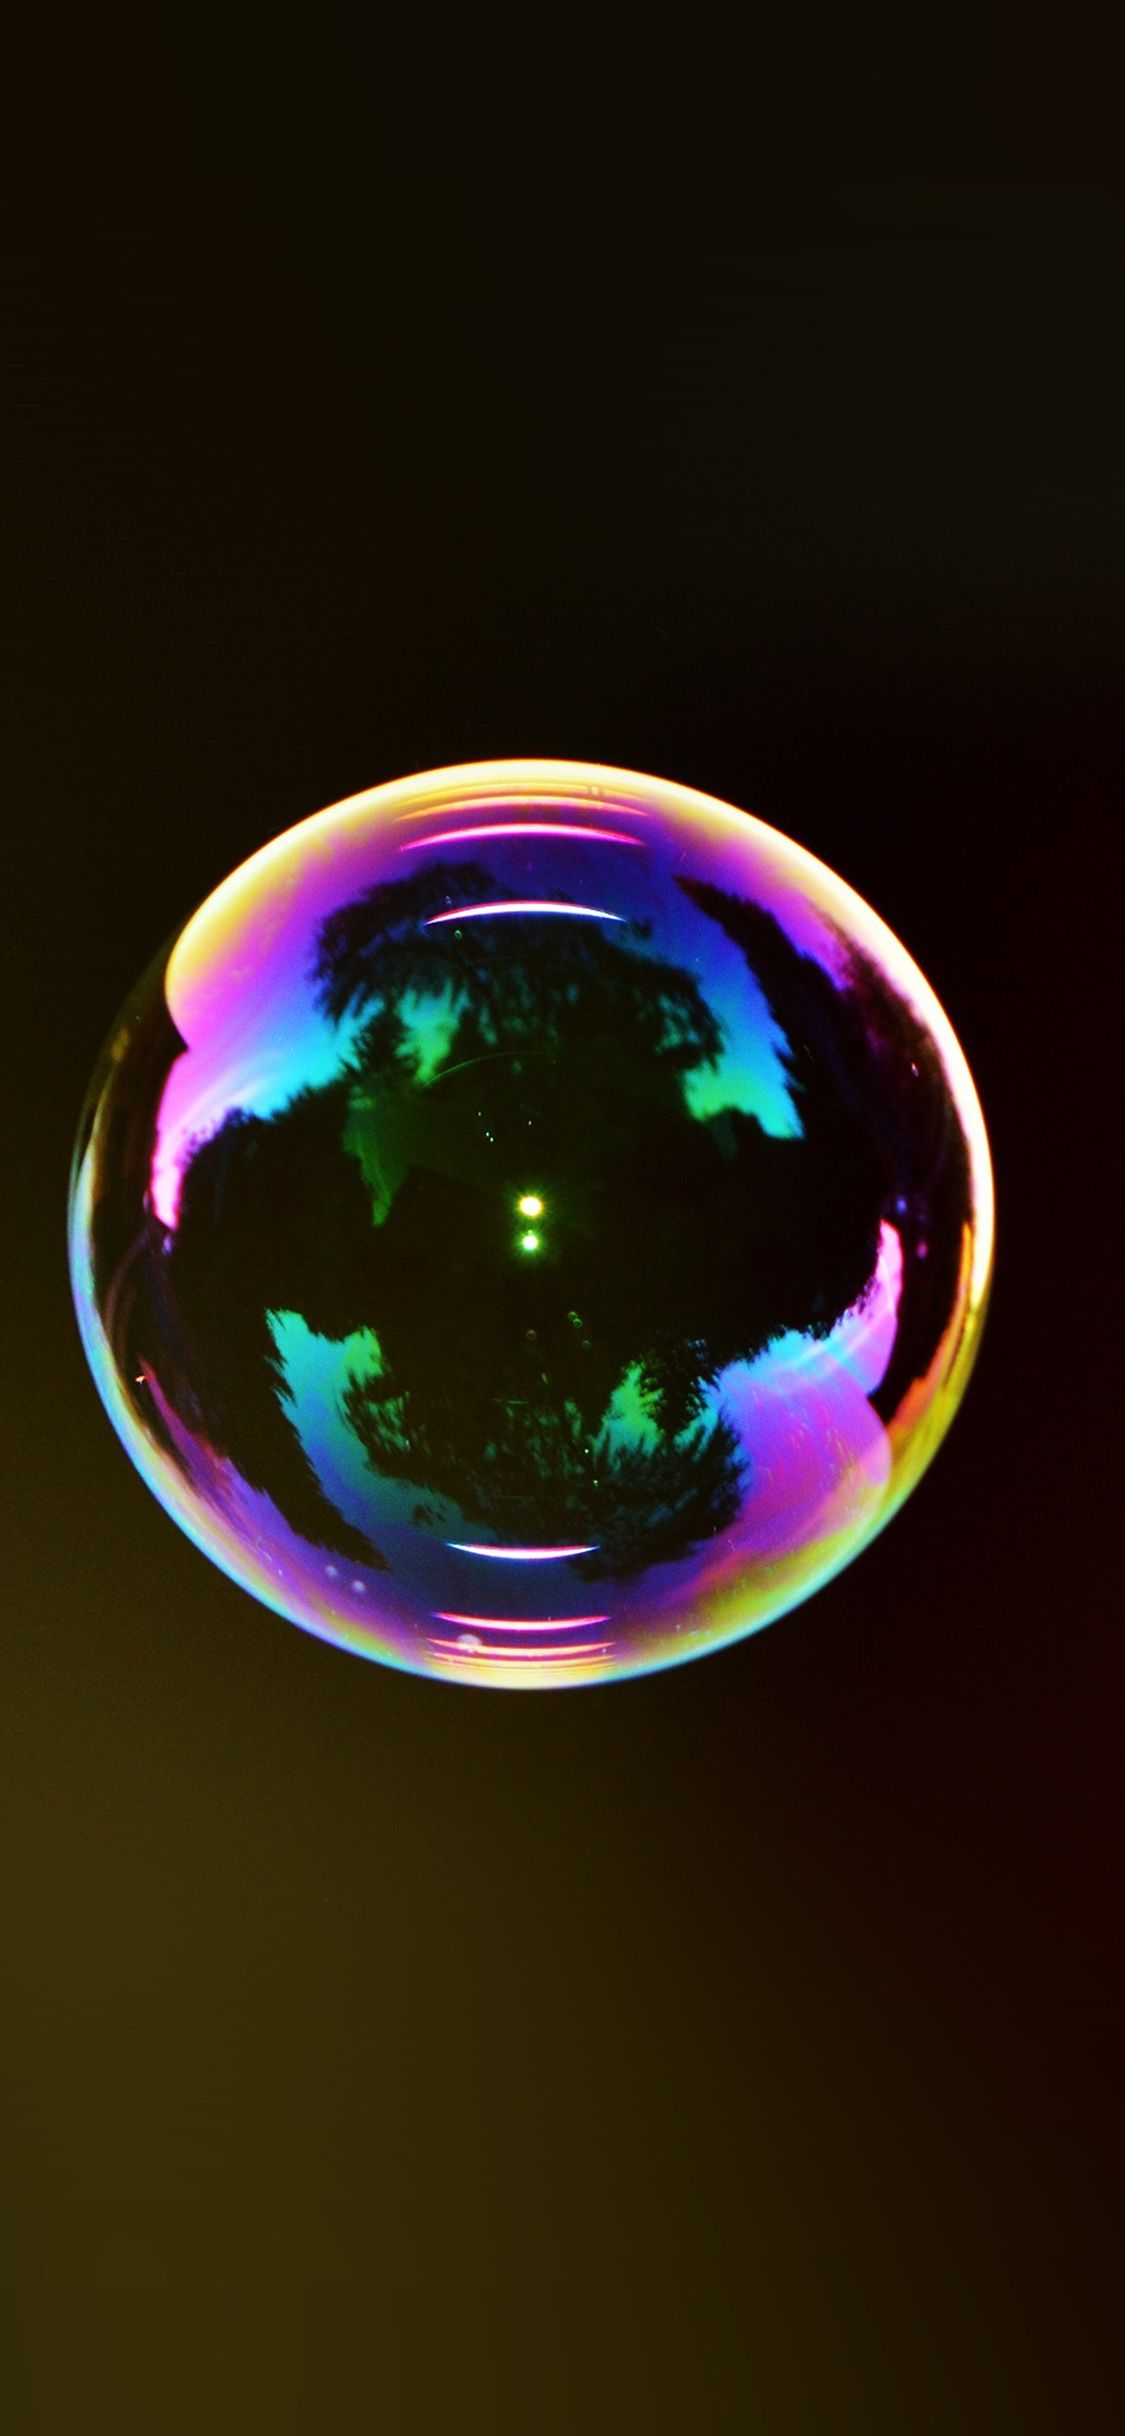 iPhone X wallpaper. bubble circle